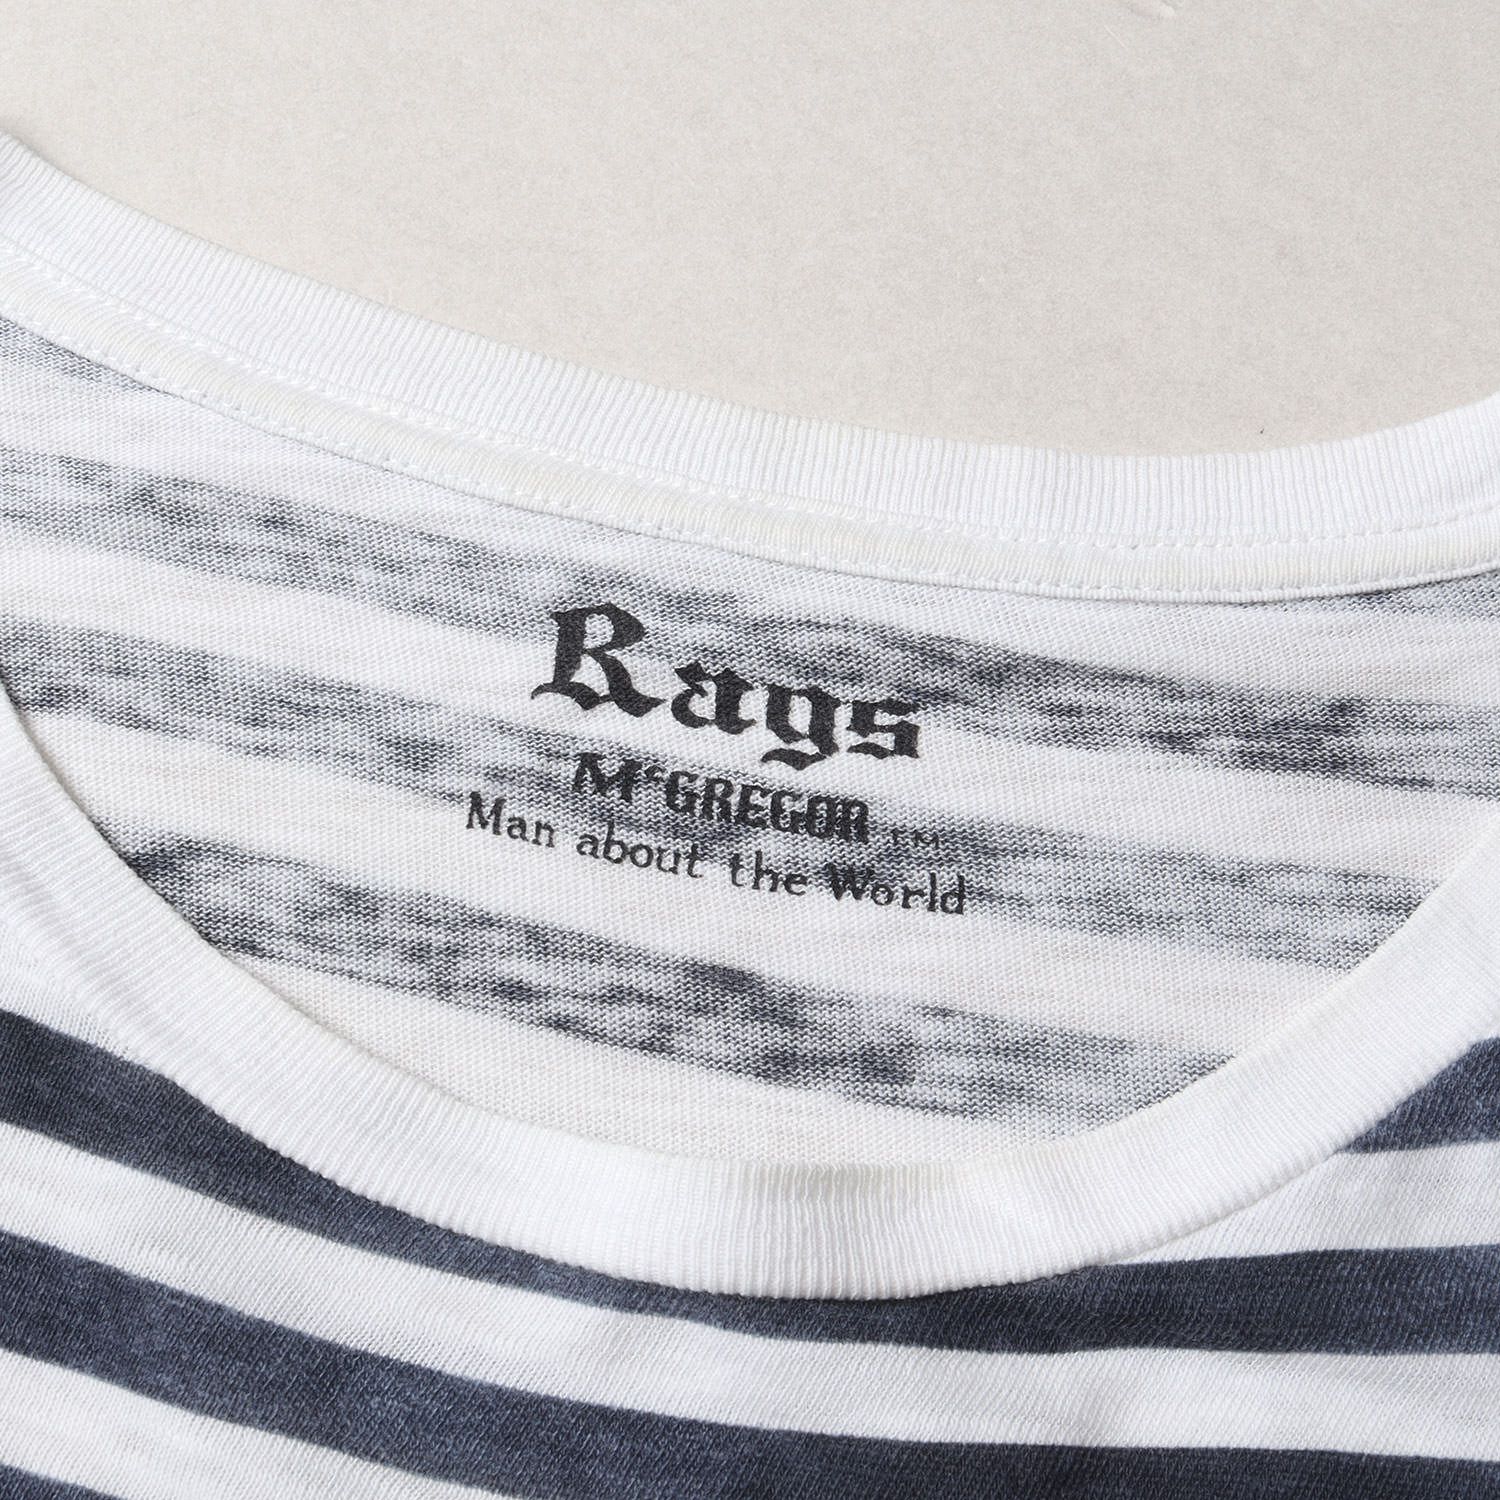 Rags McGREGOR ラグスマックレガー Tシャツ サイズ:M かすれ ボーダー クルーネック Tシャツ ホワイト ネイビー 白紺 日本製  ブランド トップス カットソー 半袖